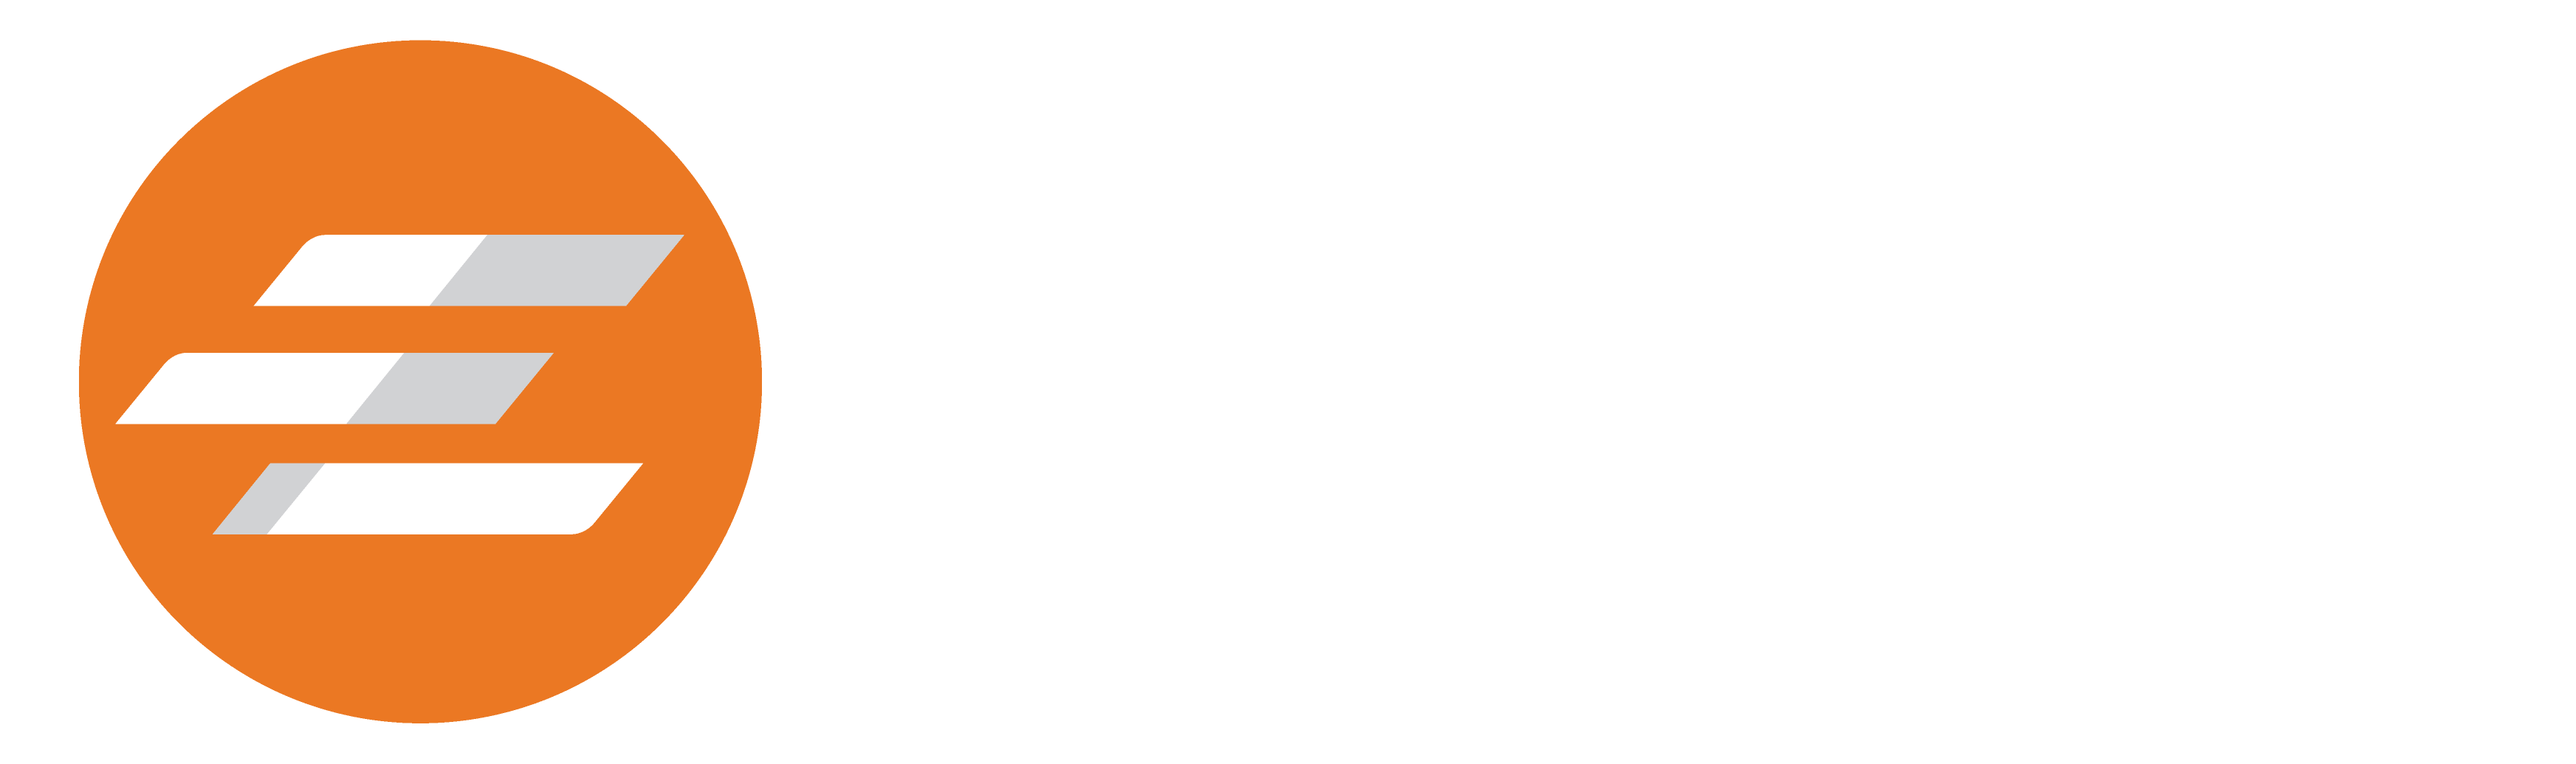 Atomfab标志